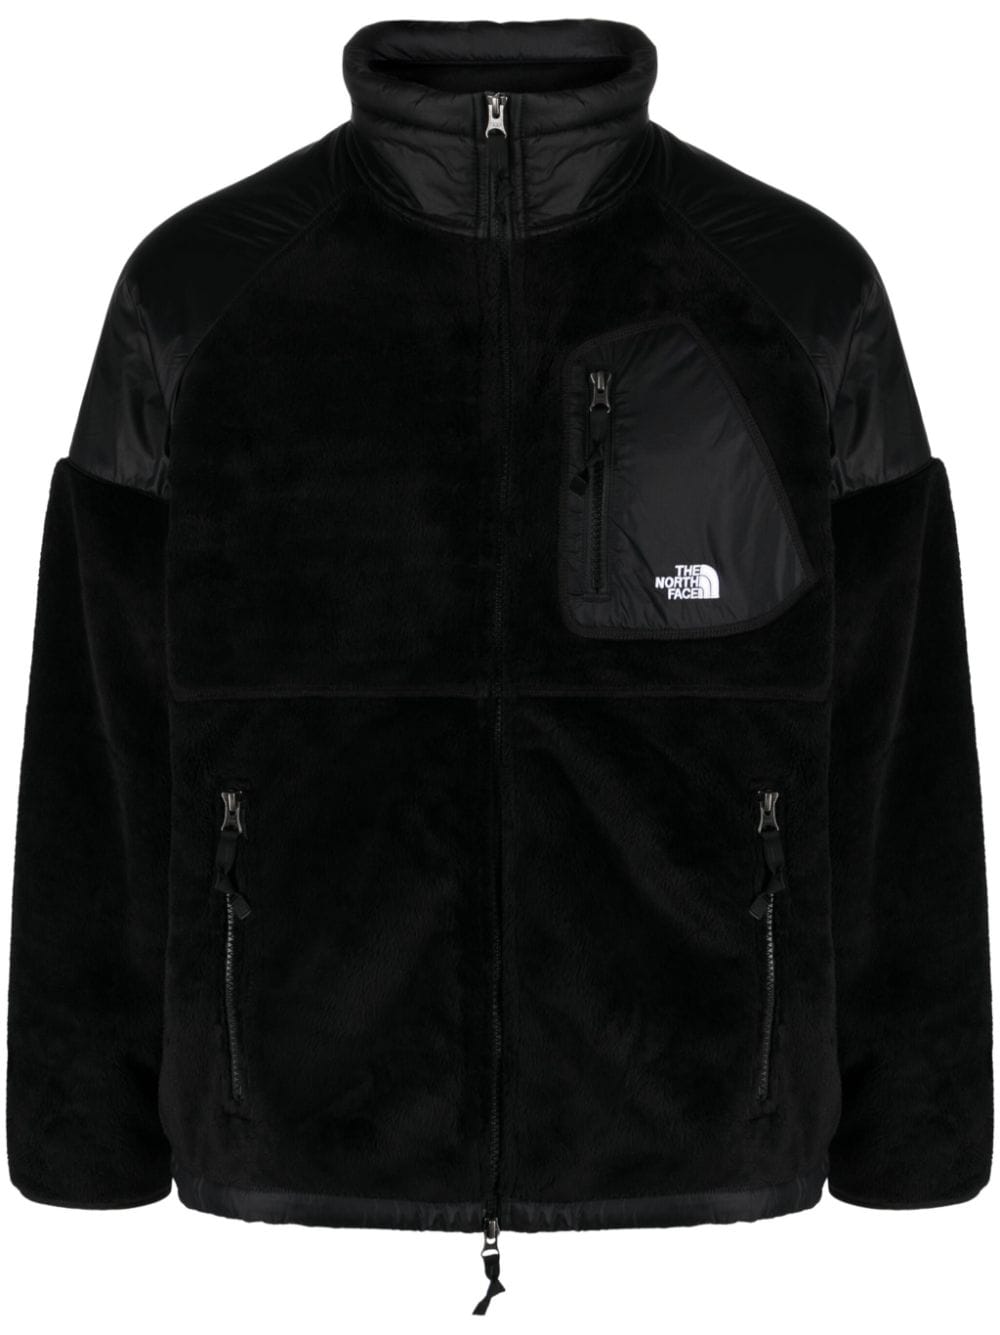 ★supreme★The North Face Fleece JacketサイズM